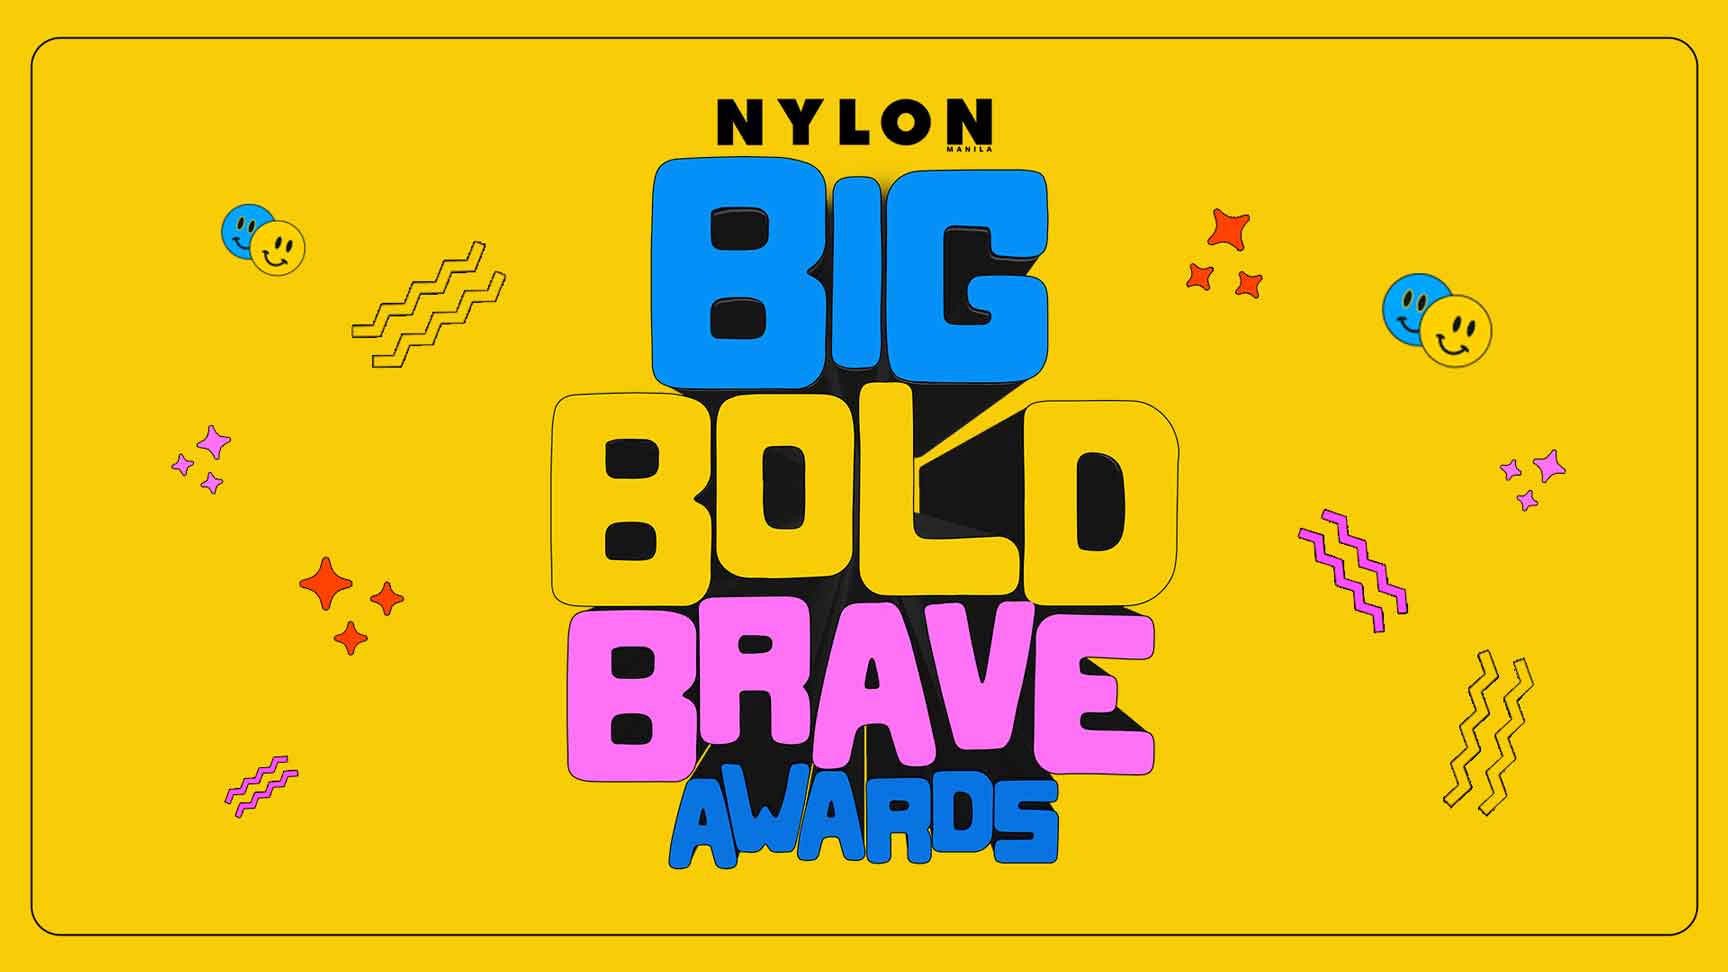 nylon manila big bold brave awards